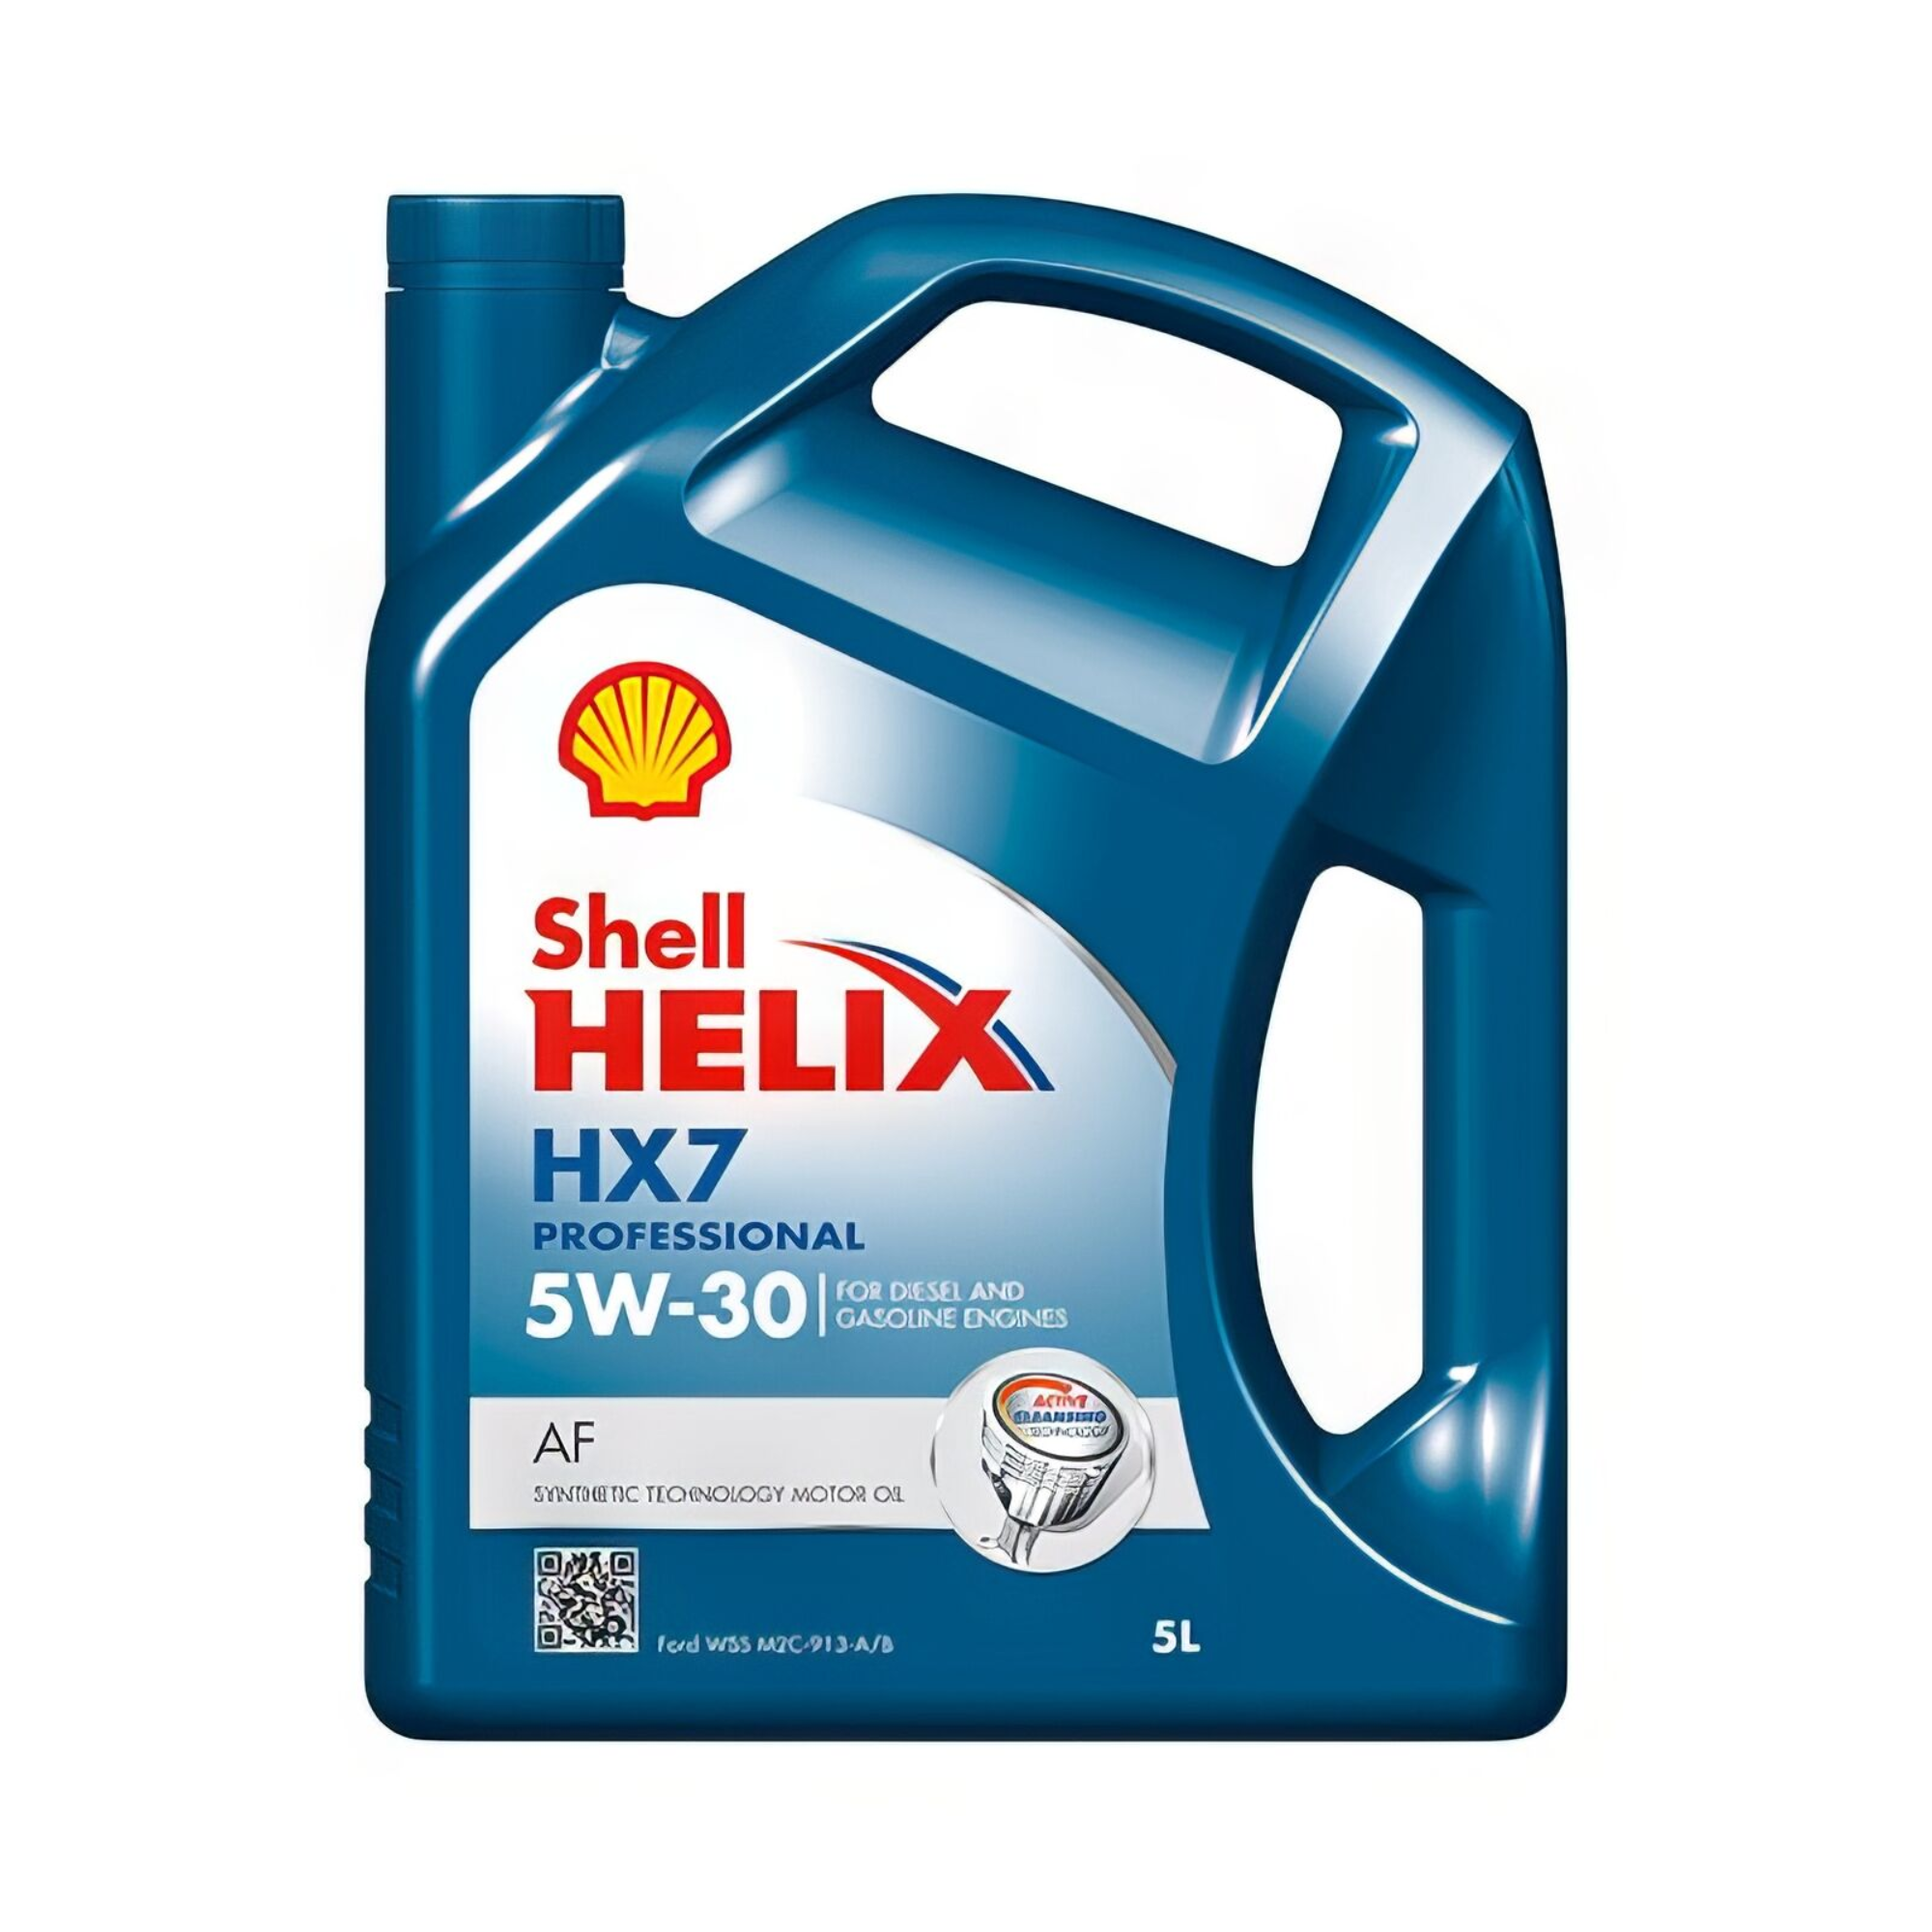 Shell Helix Engine Oil HX7 Pro AF 5W-30 5L